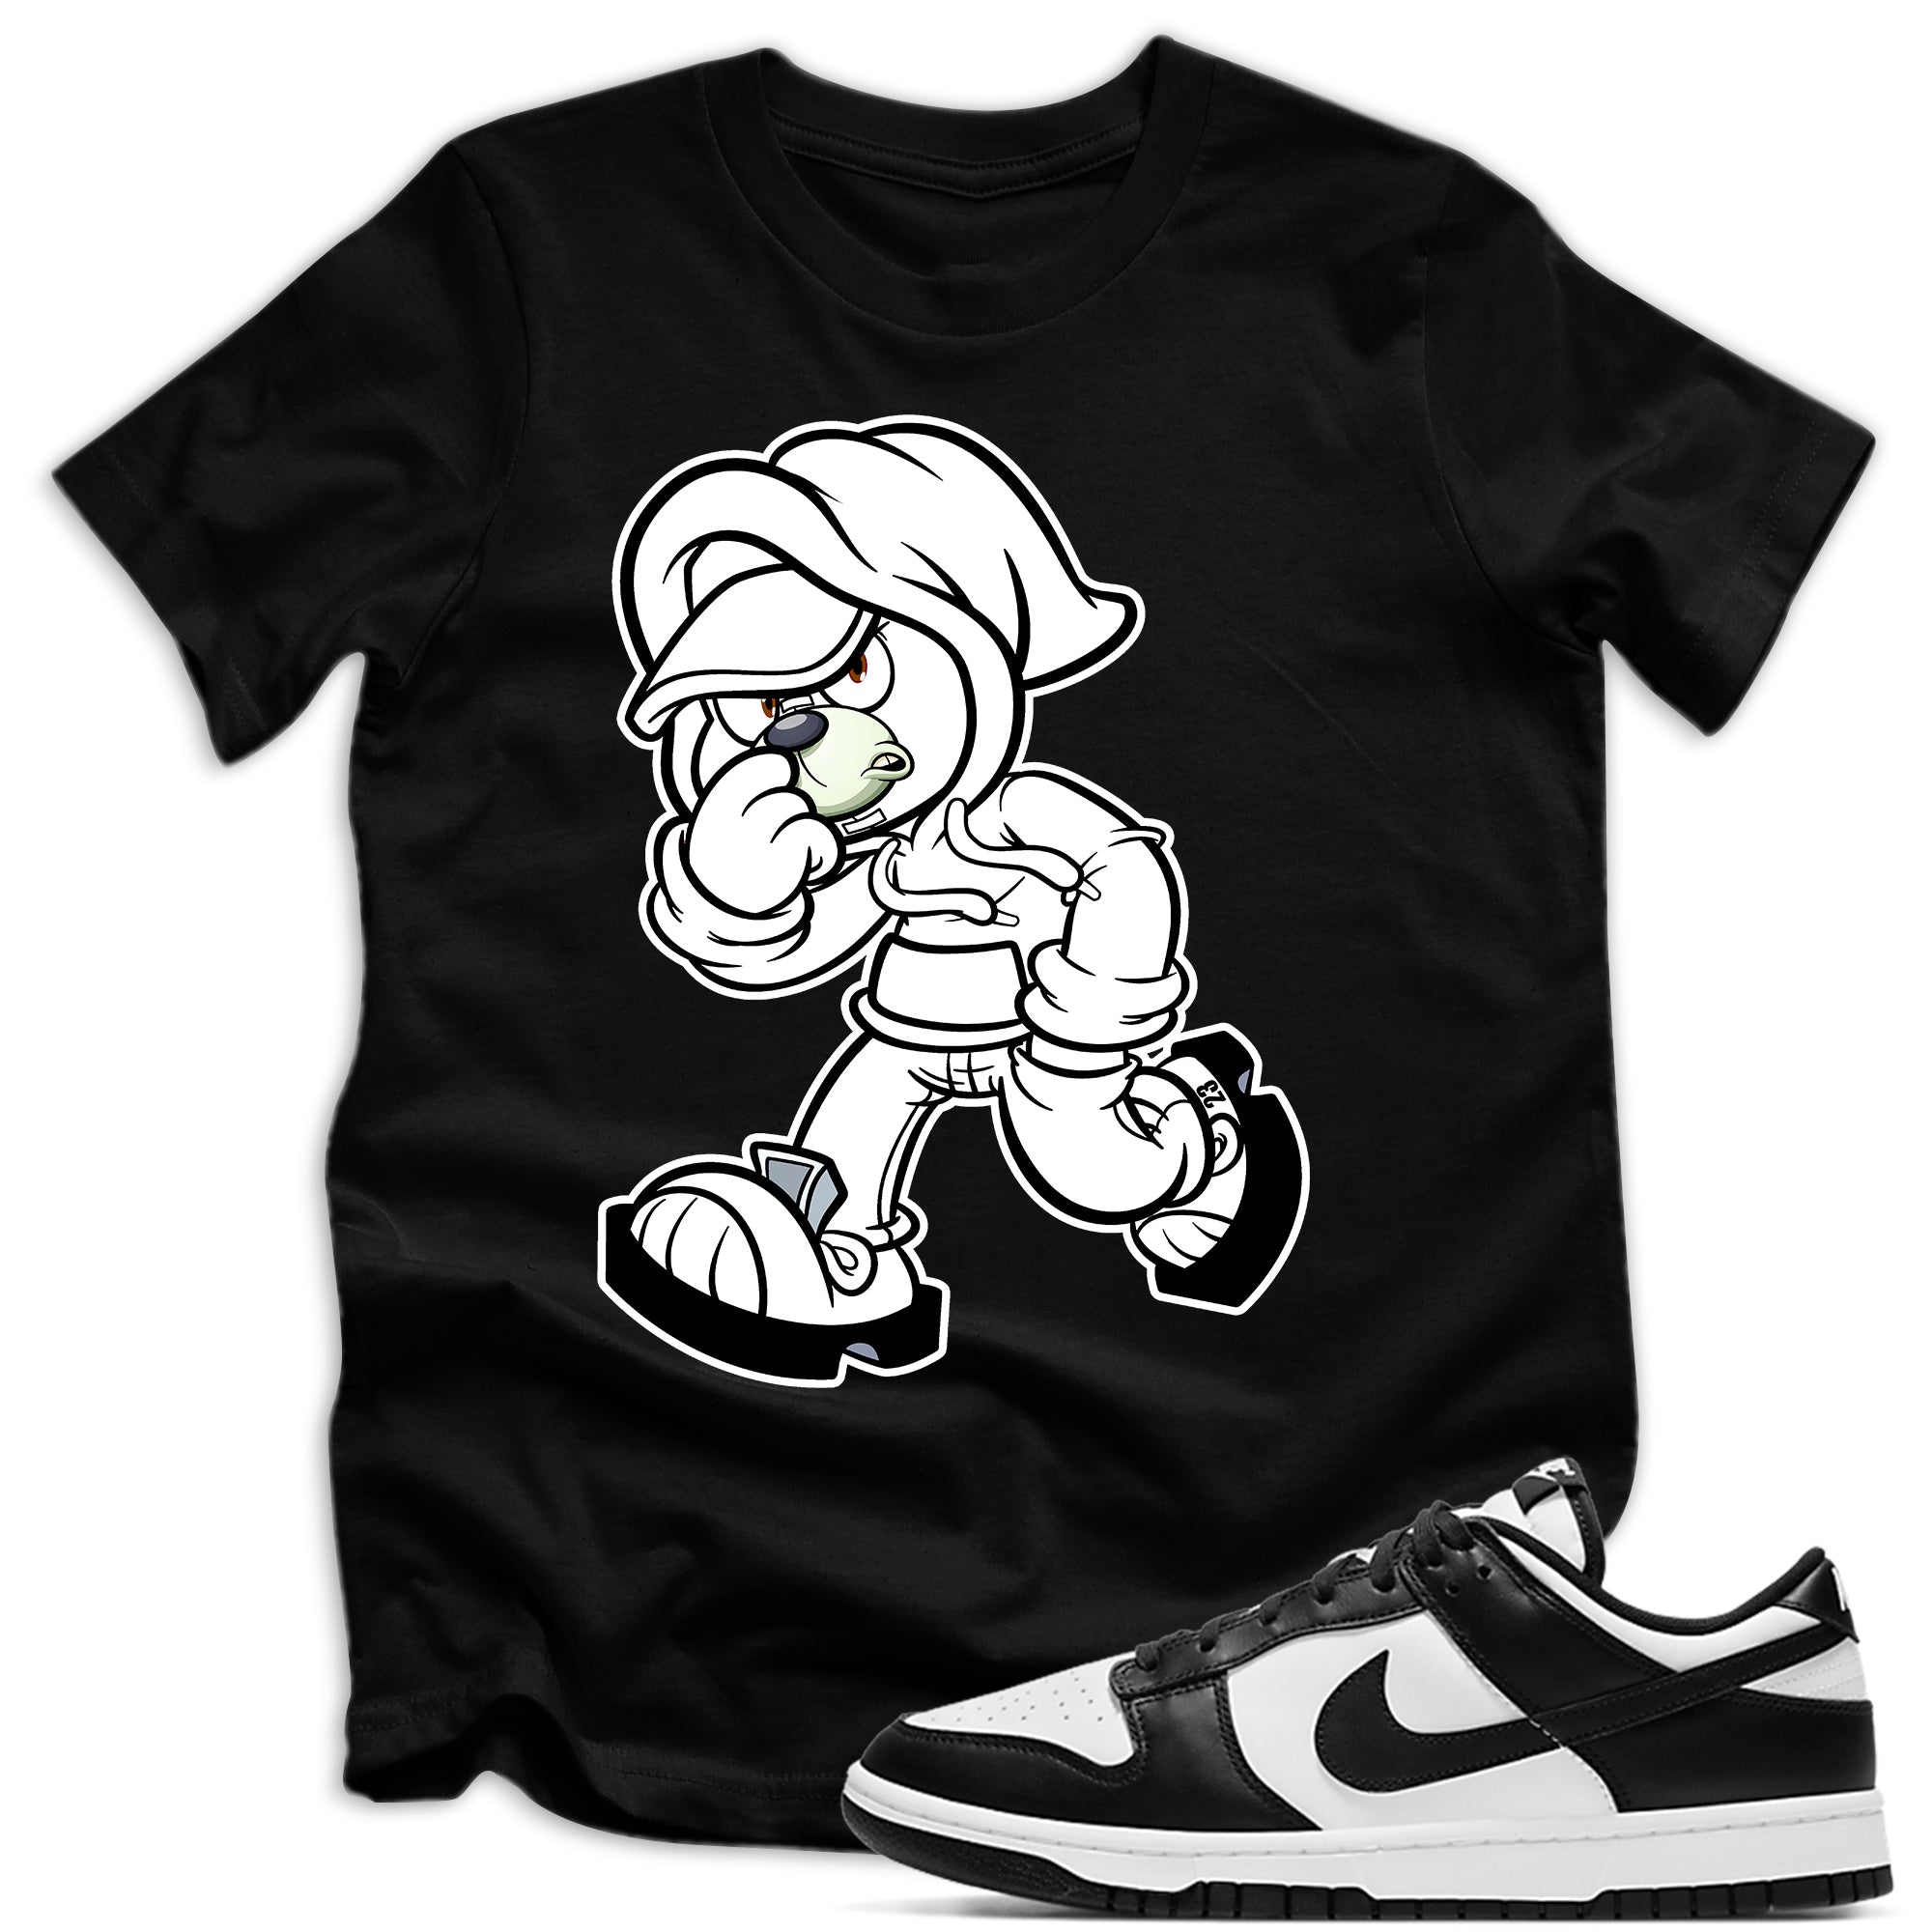 Hoodie Bear Shirt Nike Dunk Retro White Black photo 